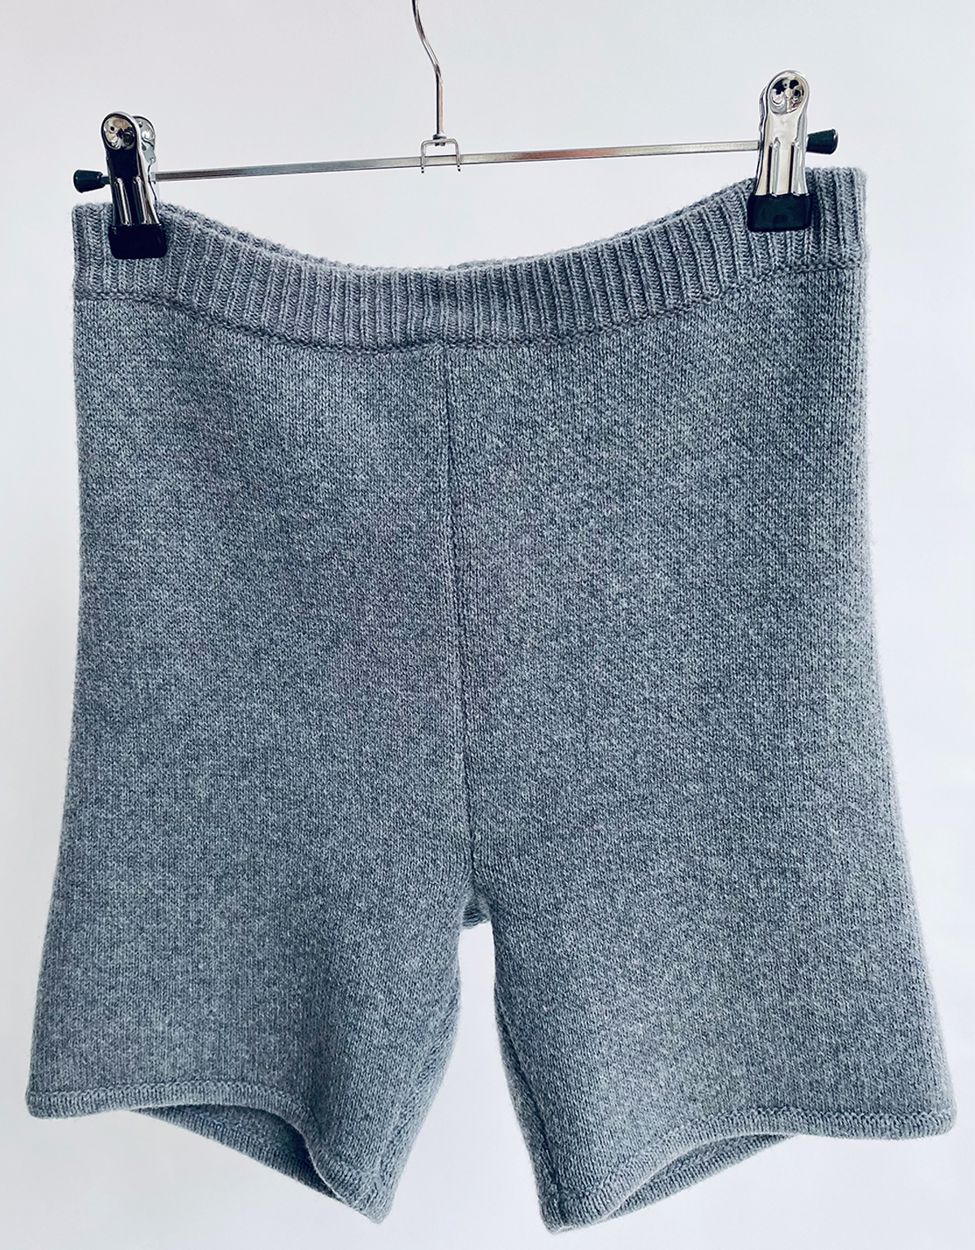 Magda Butrym knit pants size 34